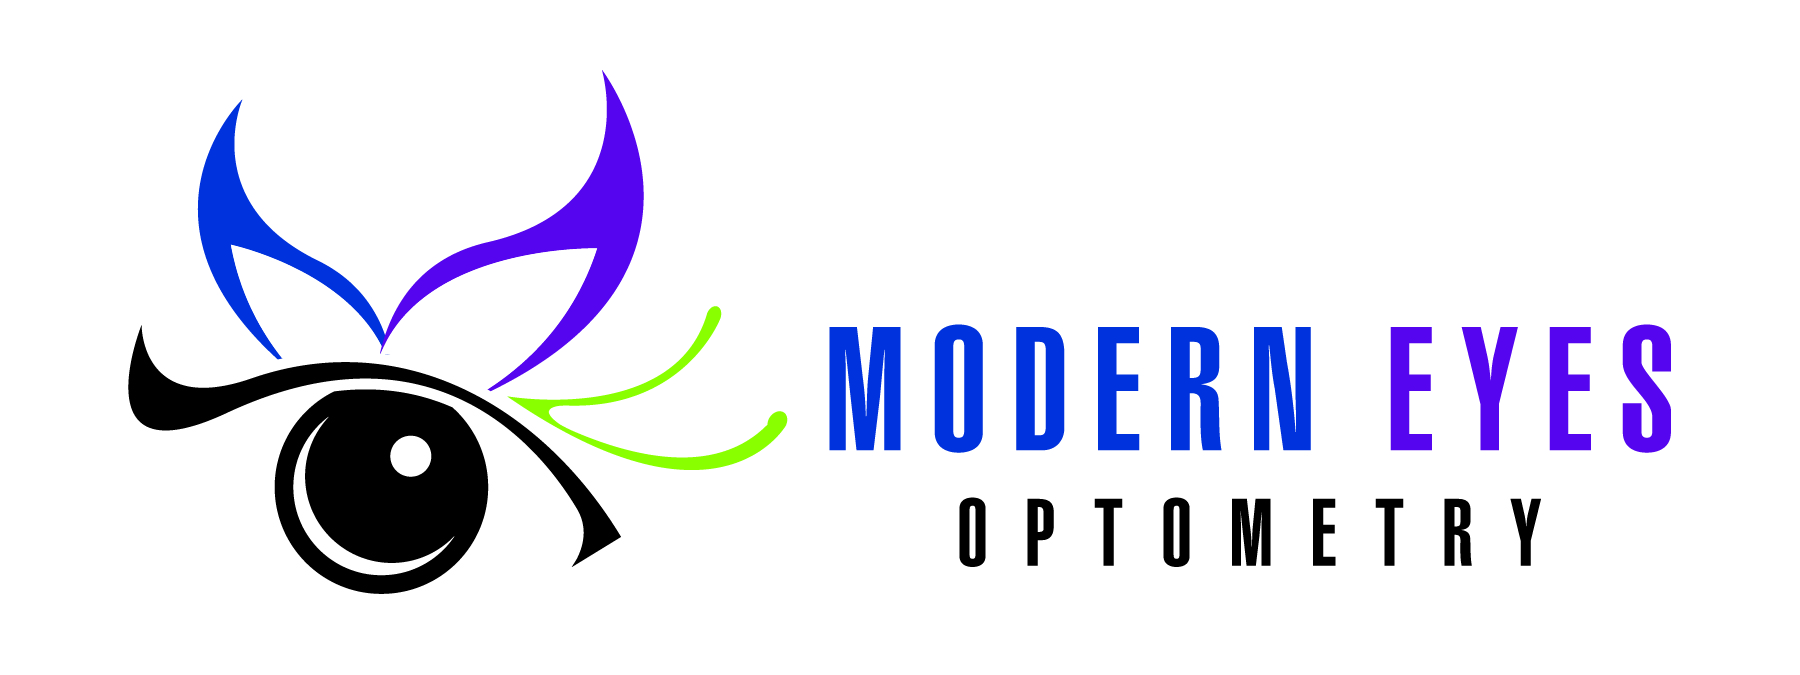 Modern Eyes Optometry - Honolulu Logo